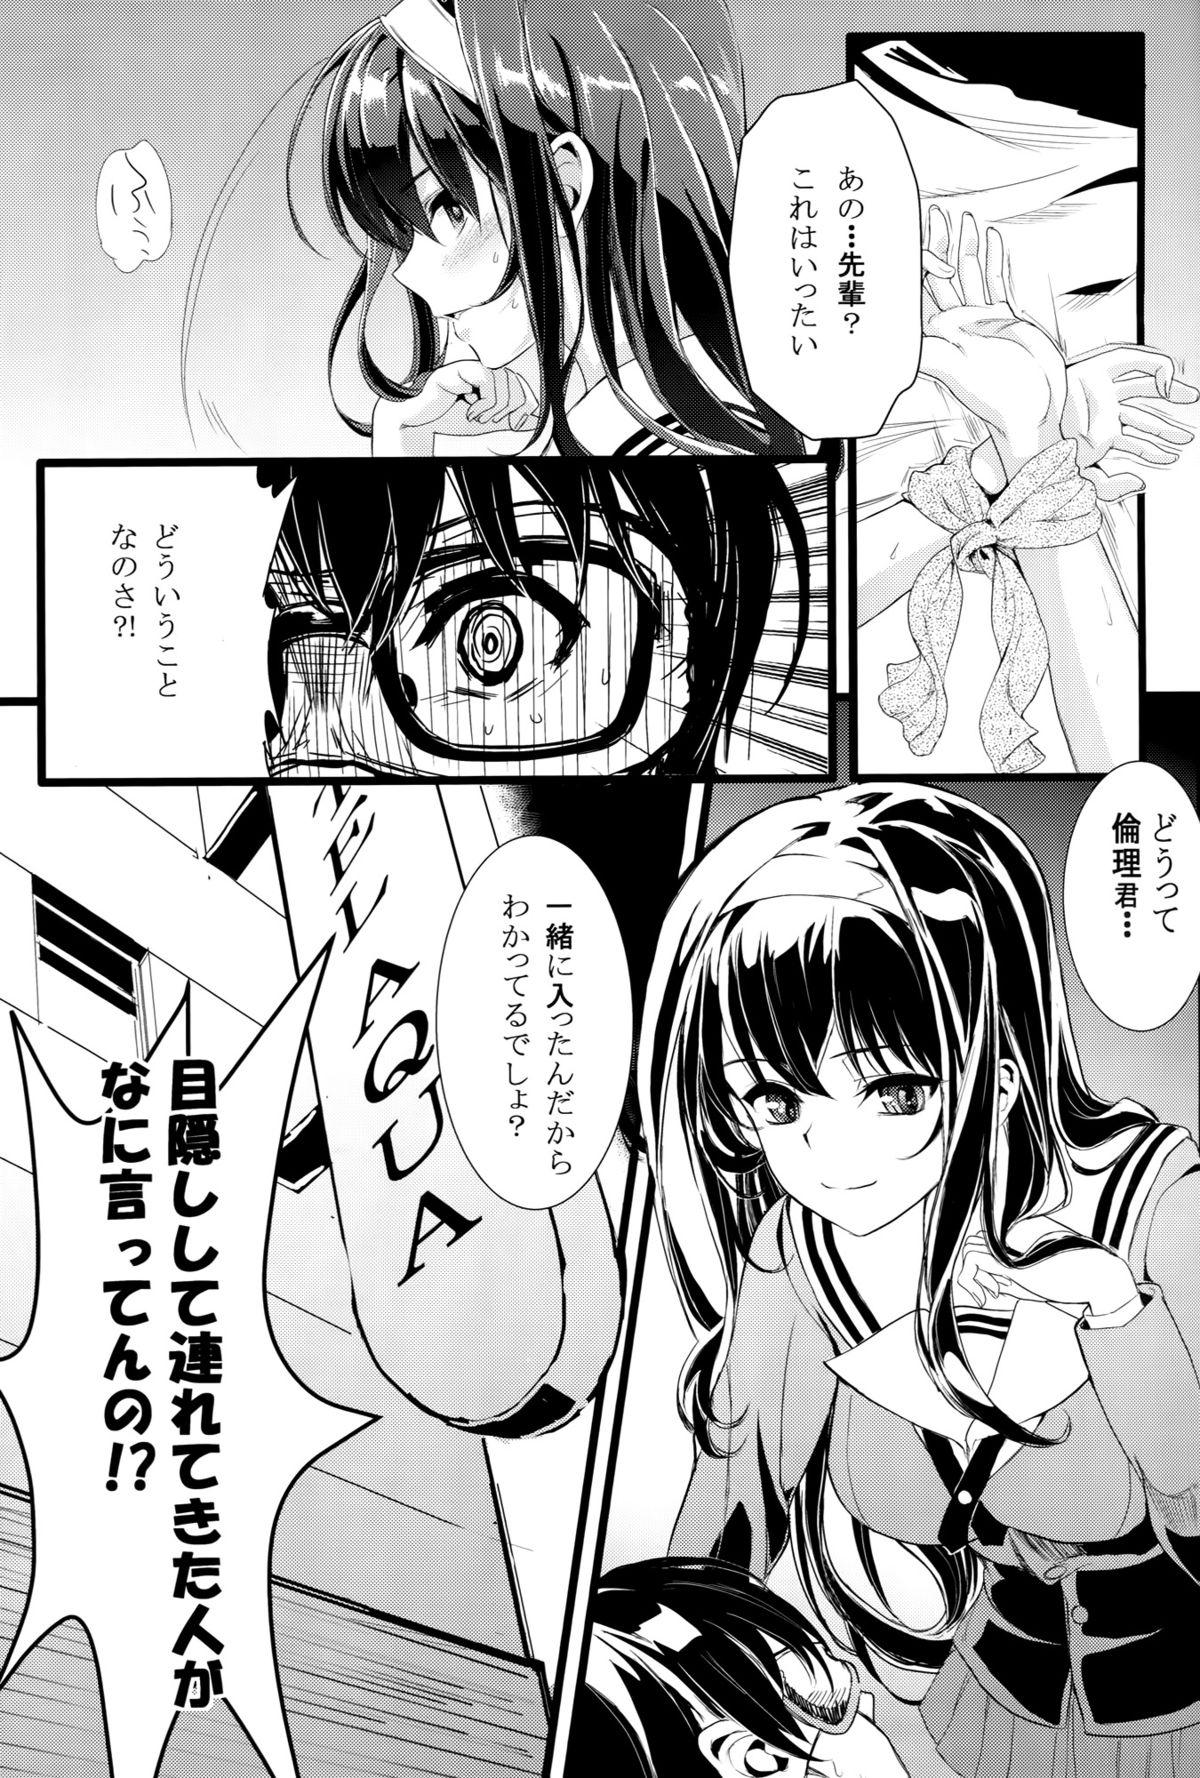 Blowjob Saenai Futari no Itashikata - Saenai heroine no sodatekata Wanking - Page 2